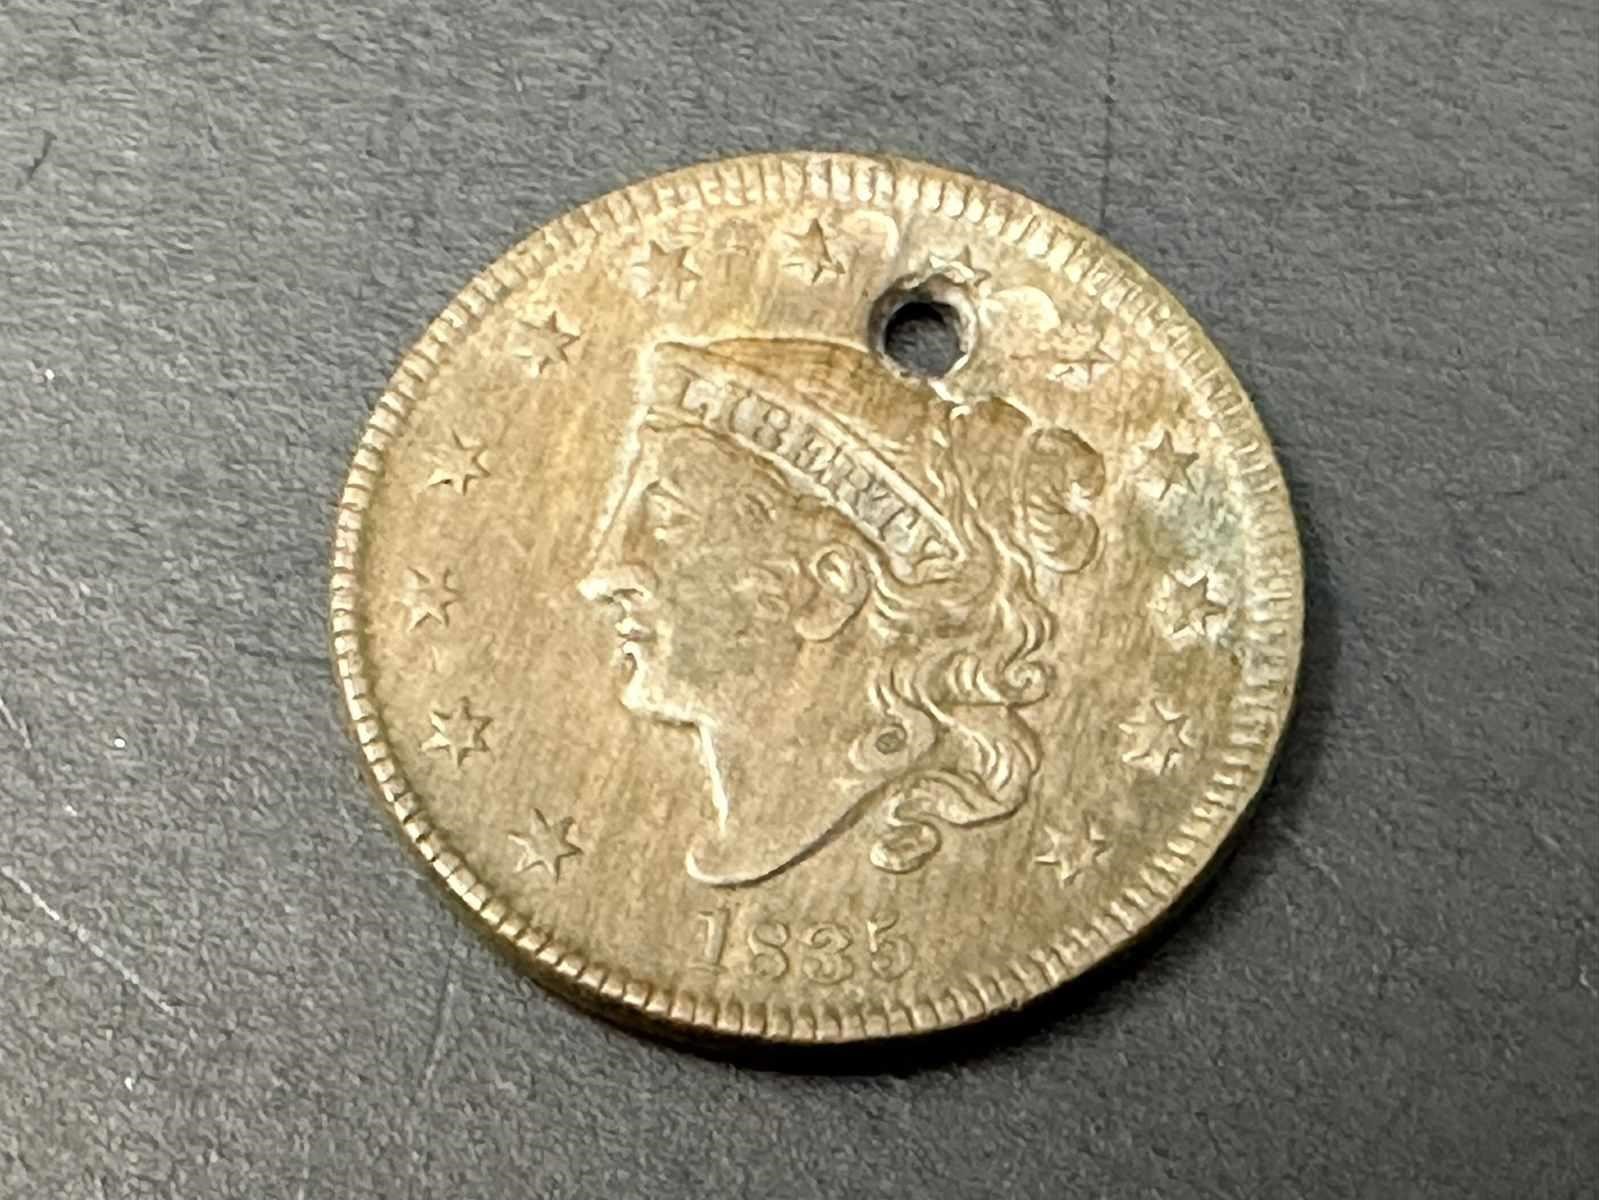 1835 Matron Head Large Cent (damage hole)